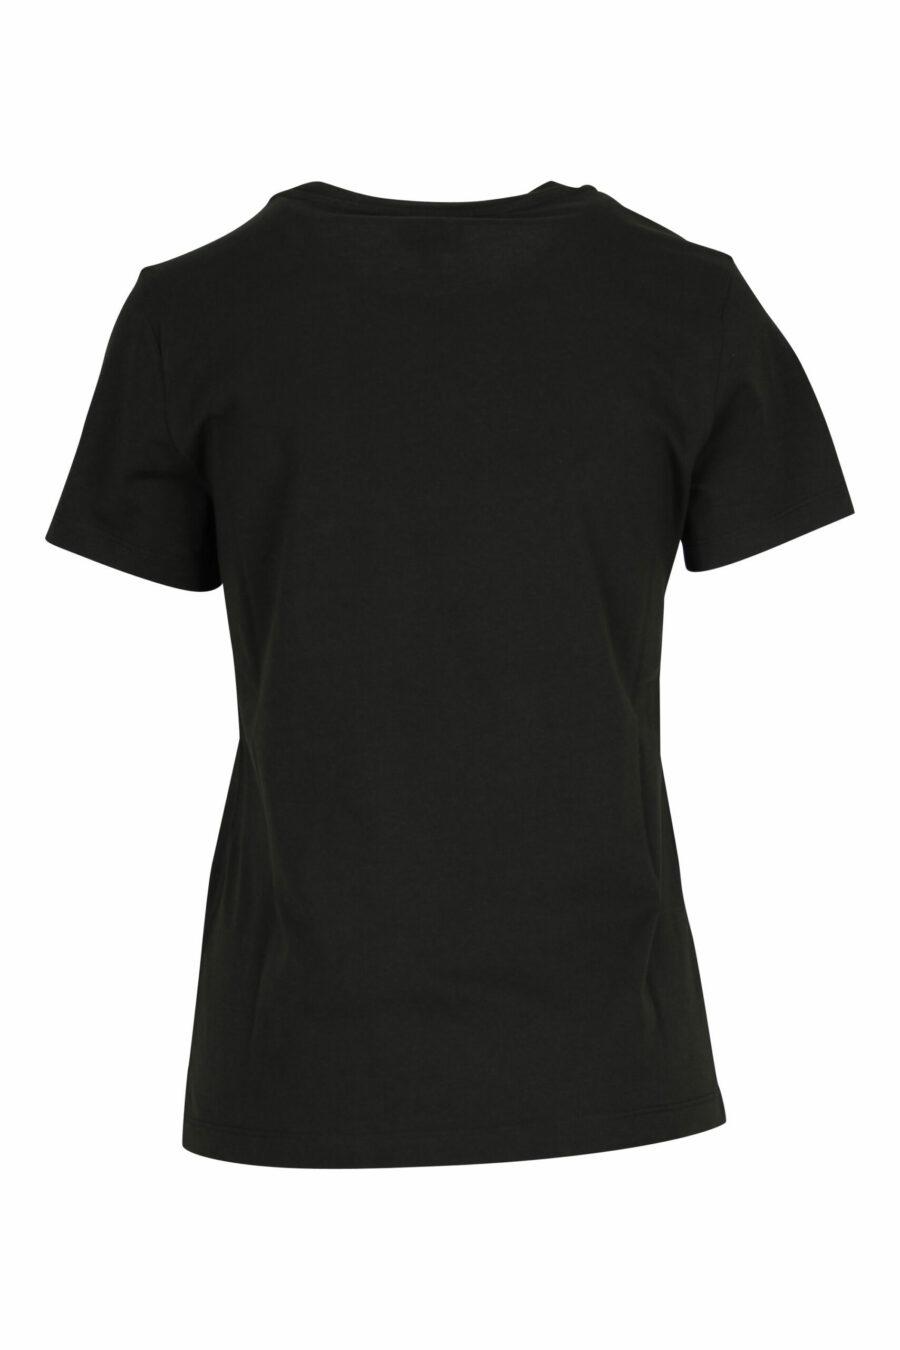 T-shirt schwarz mit weißem "kenzo boke flower" mini logo - 3612230587762 1 skaliert